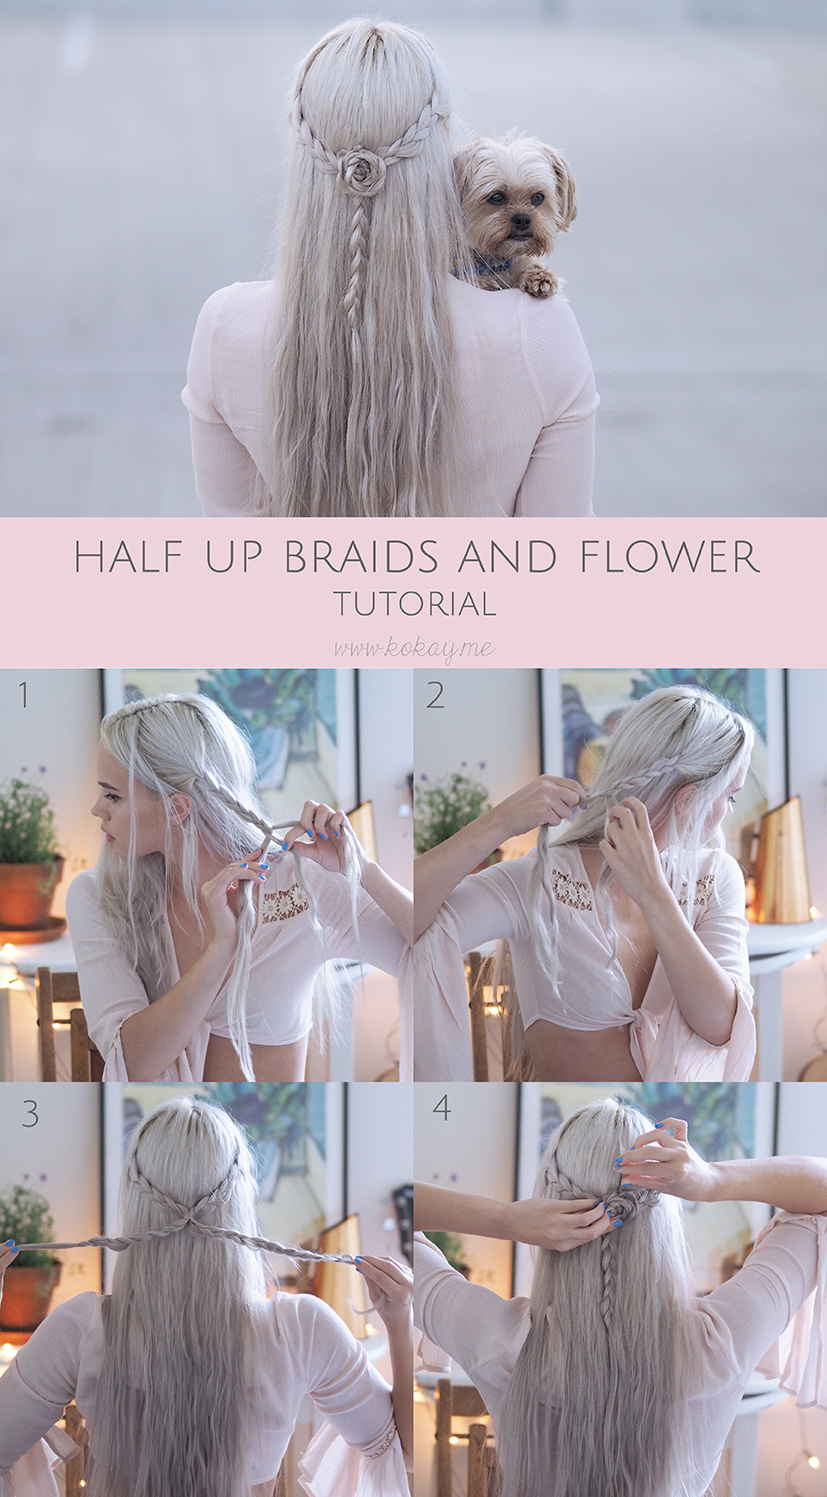 Half up braids and flowers tutorial